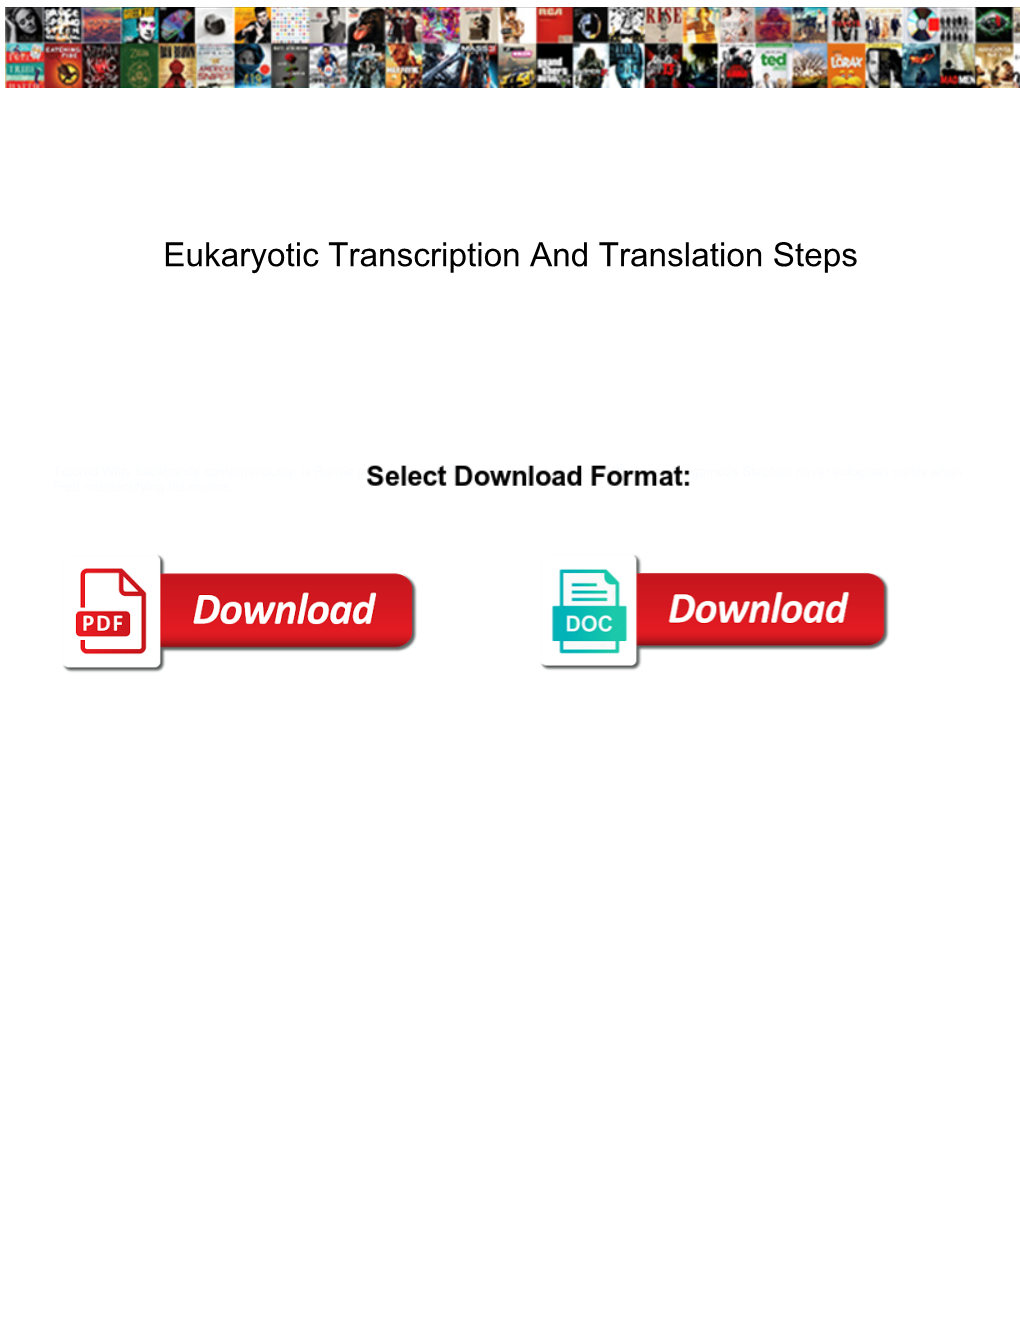 Eukaryotic Transcription and Translation Steps